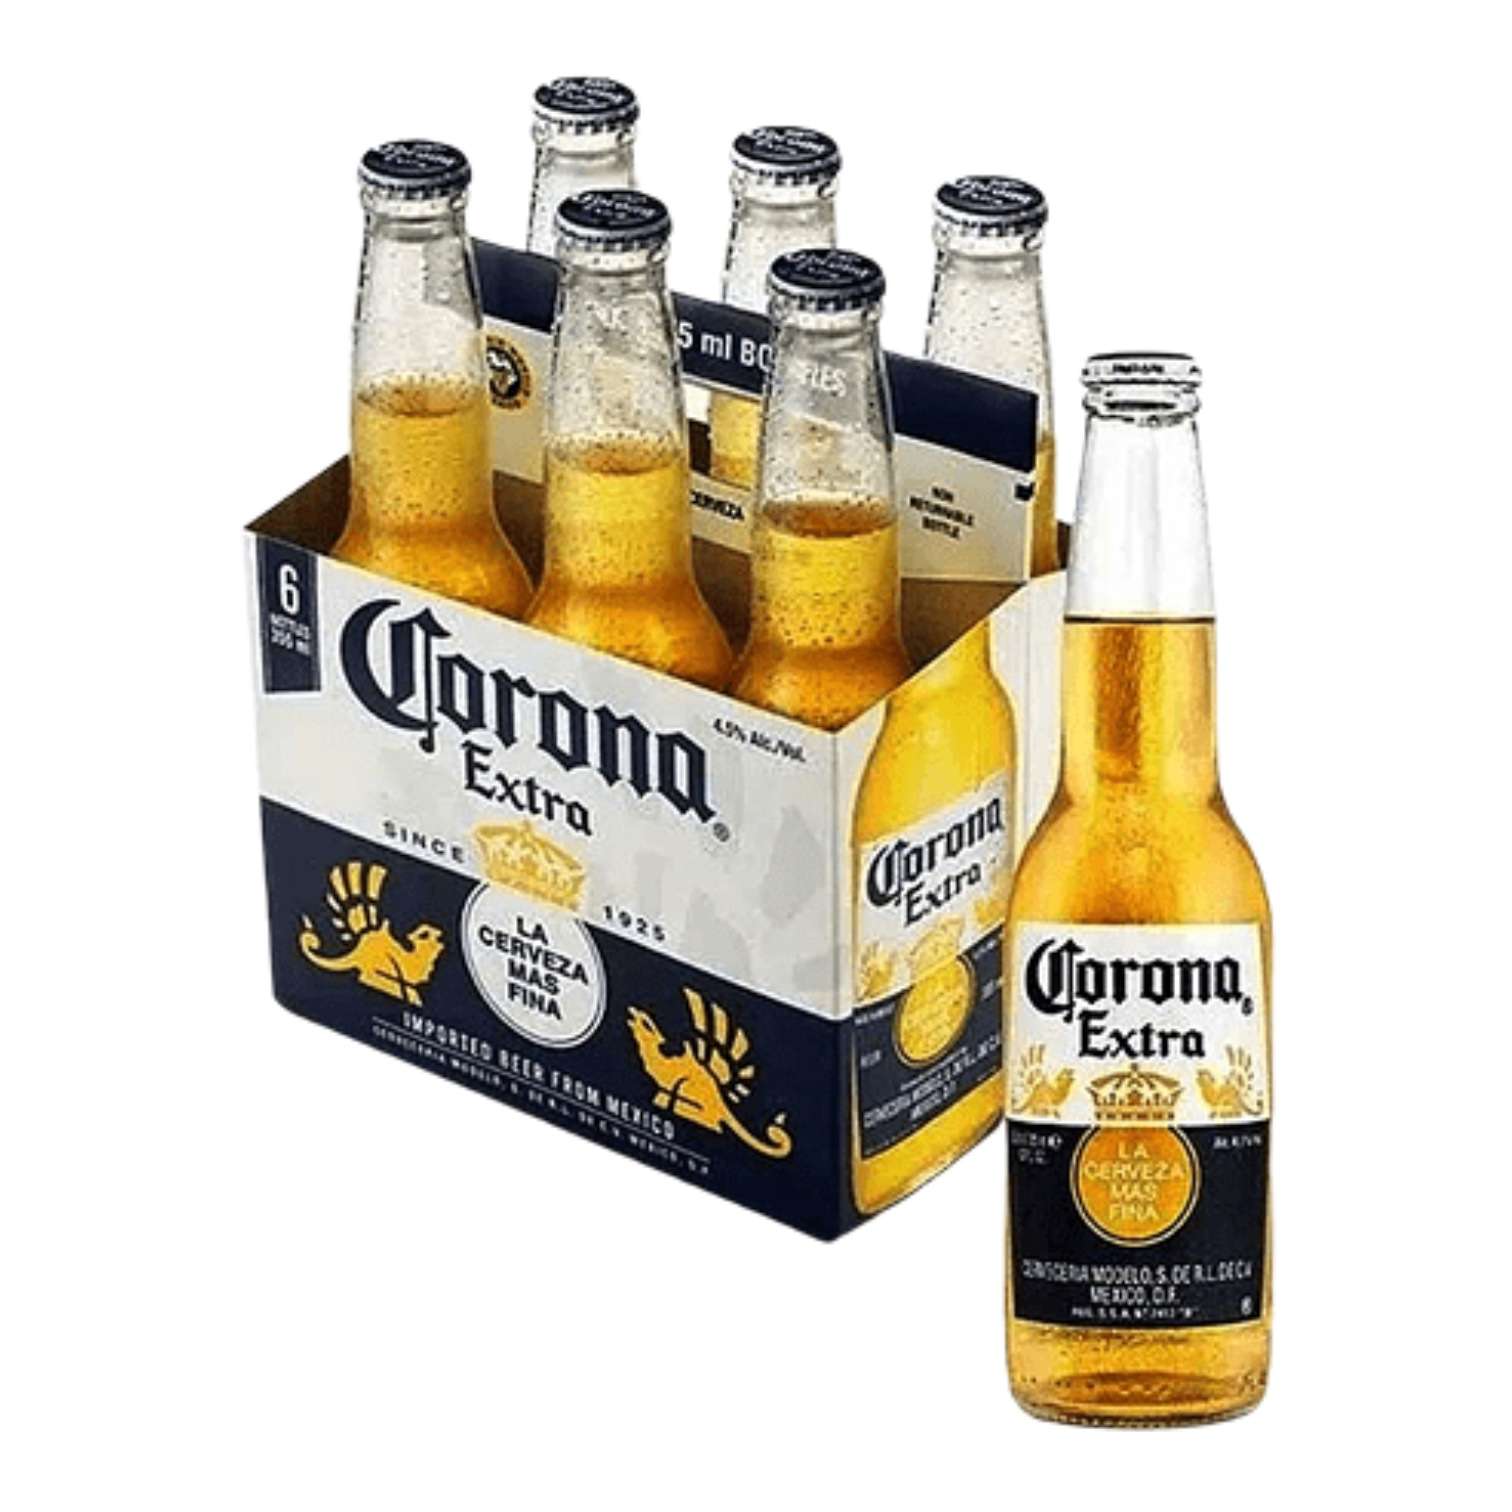 Cerveza Corona Extra Botella 6 pack 355ml - GuateSelectos - Guatemala